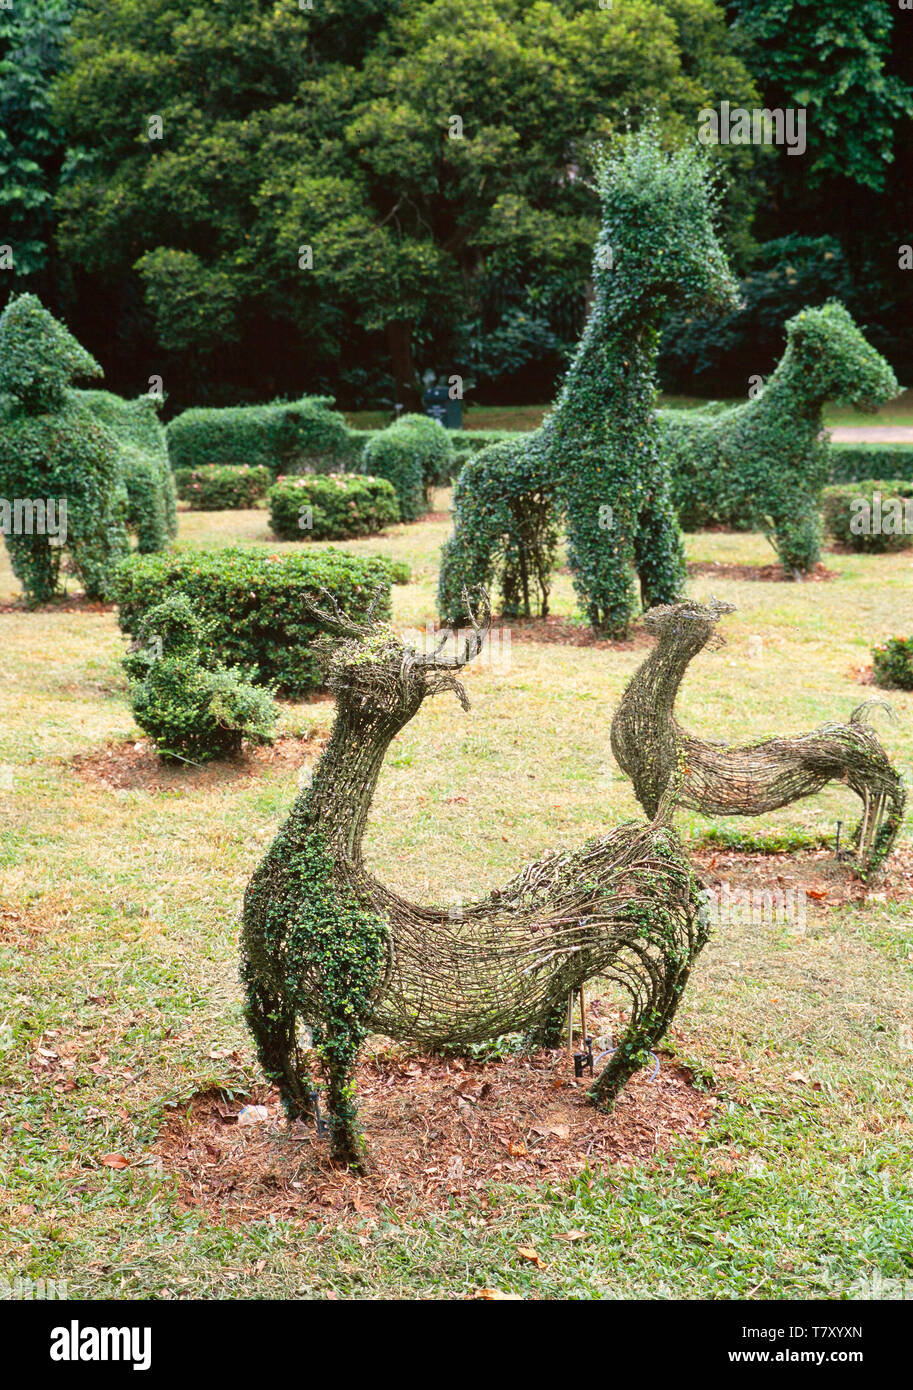 Garden shrub topiary hedge craft, animal shapes. Stock Photo